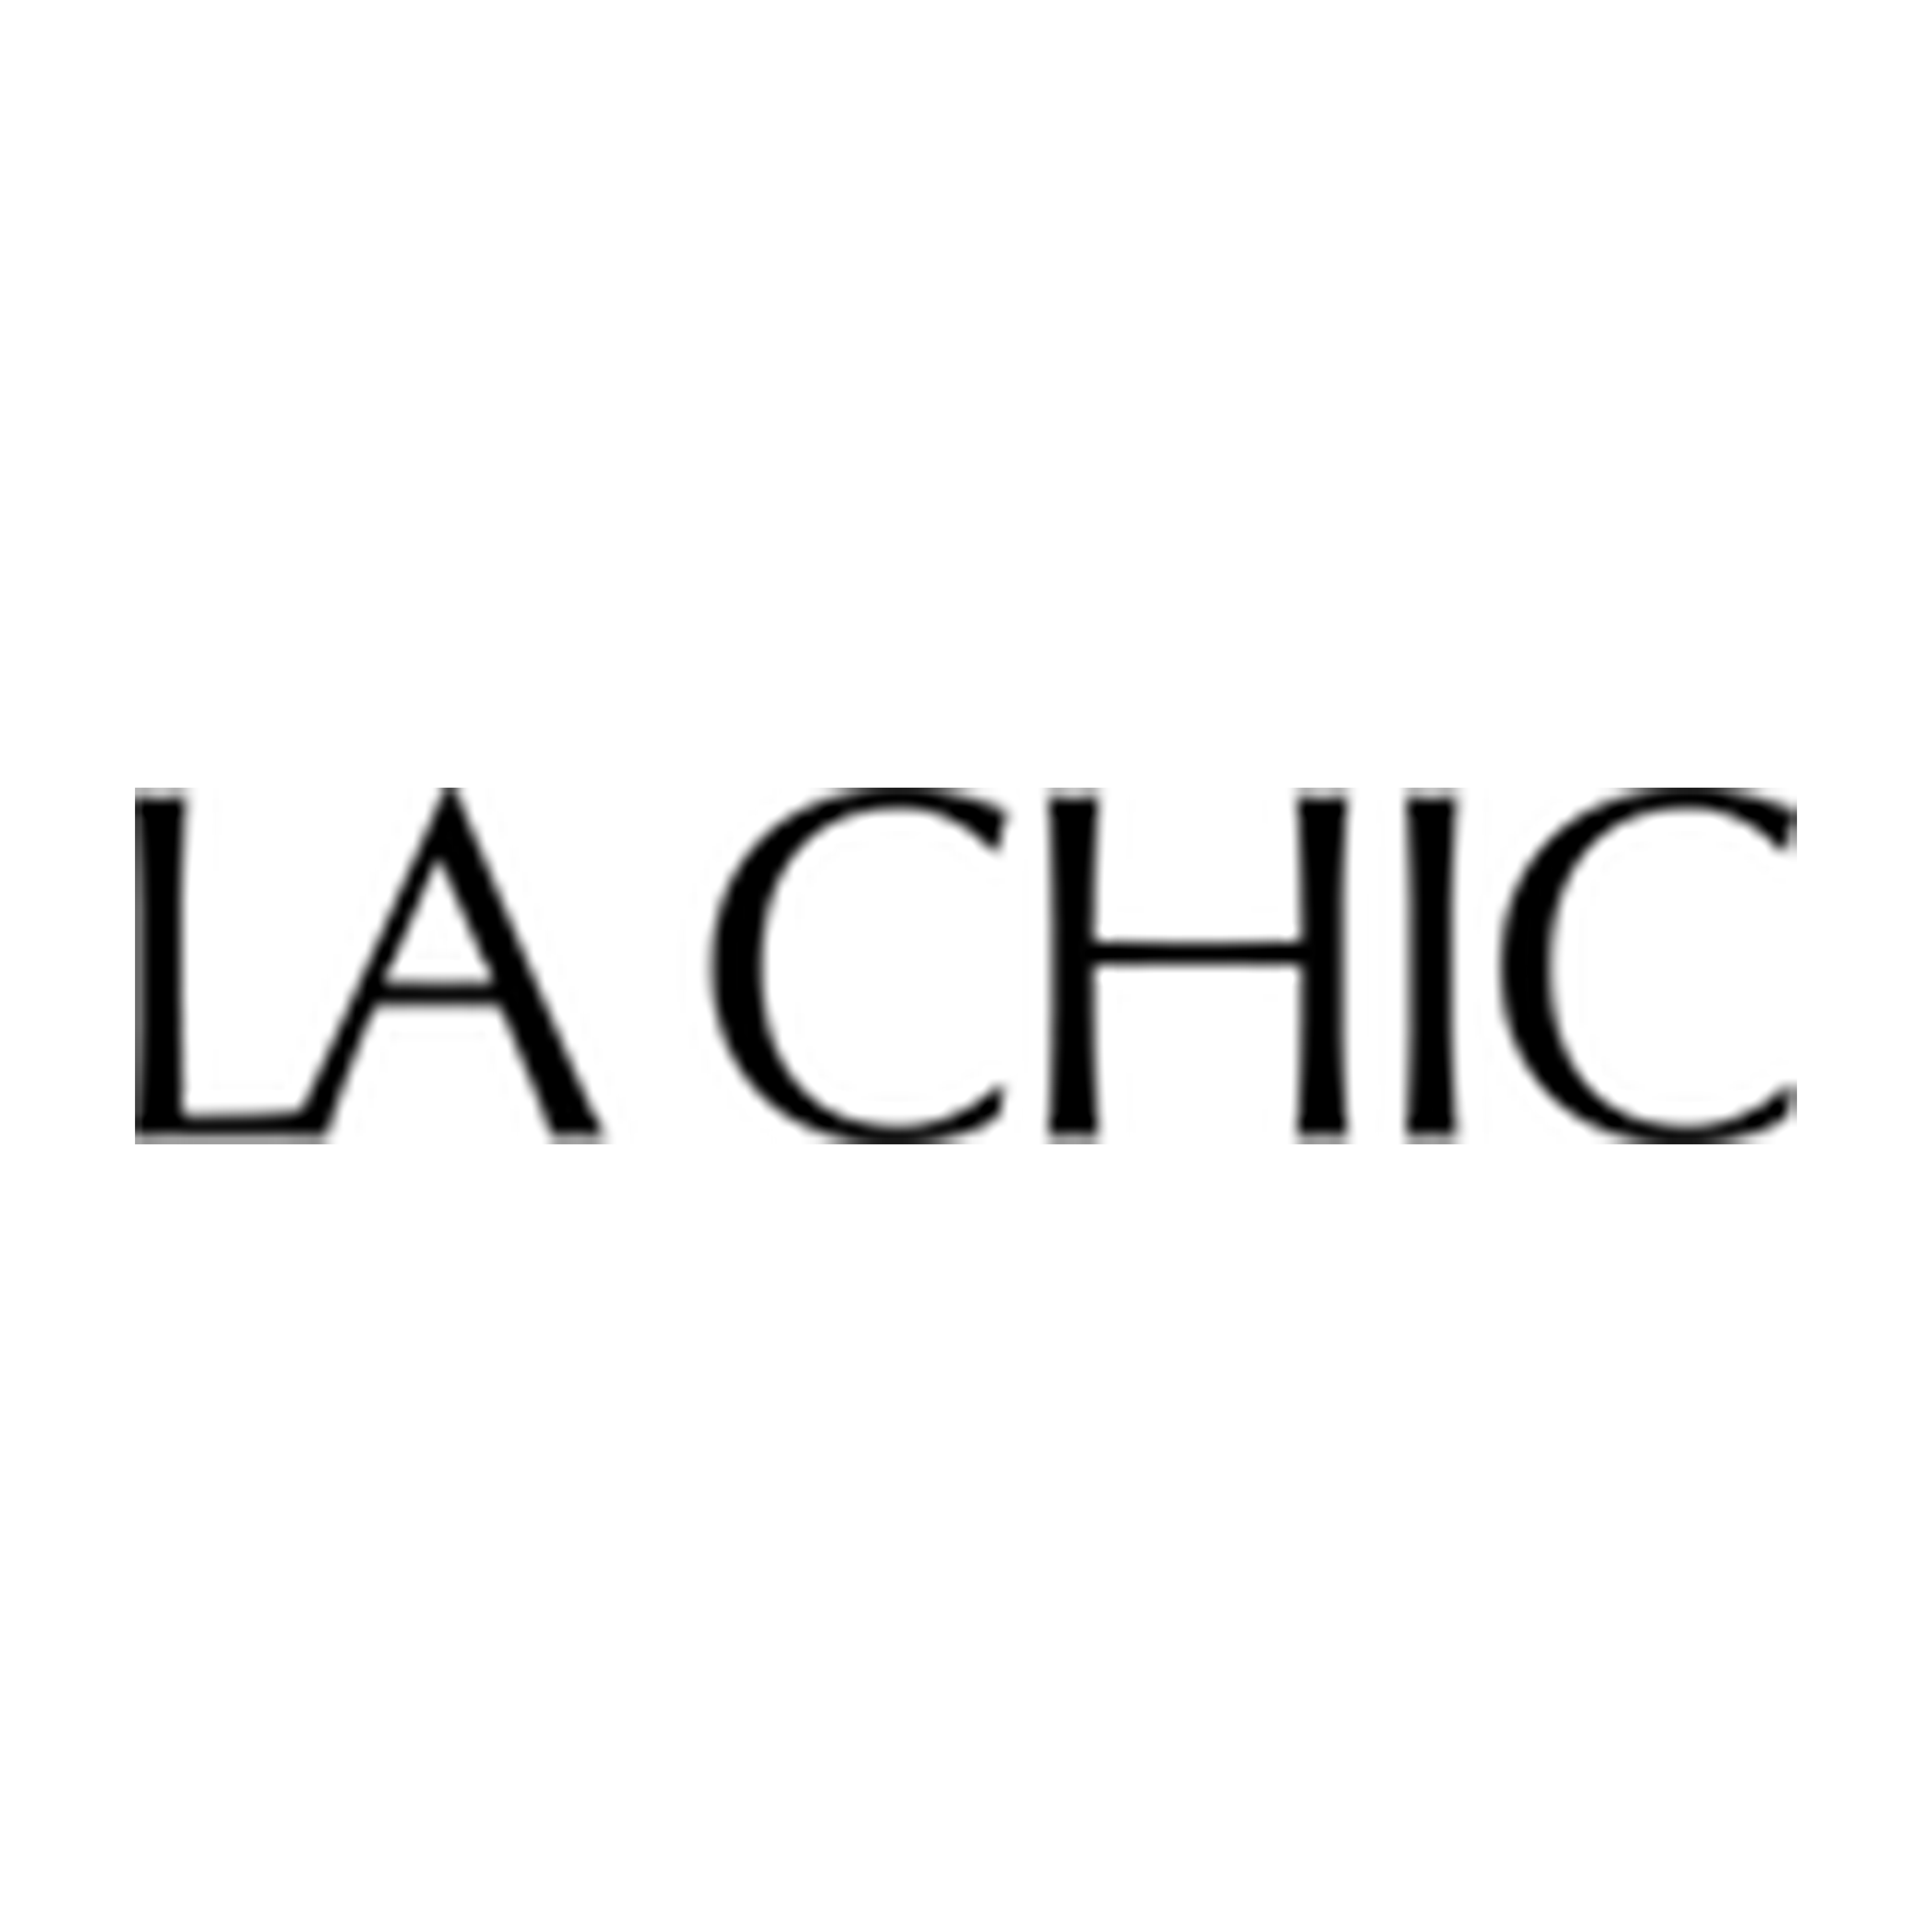 Laychic logo